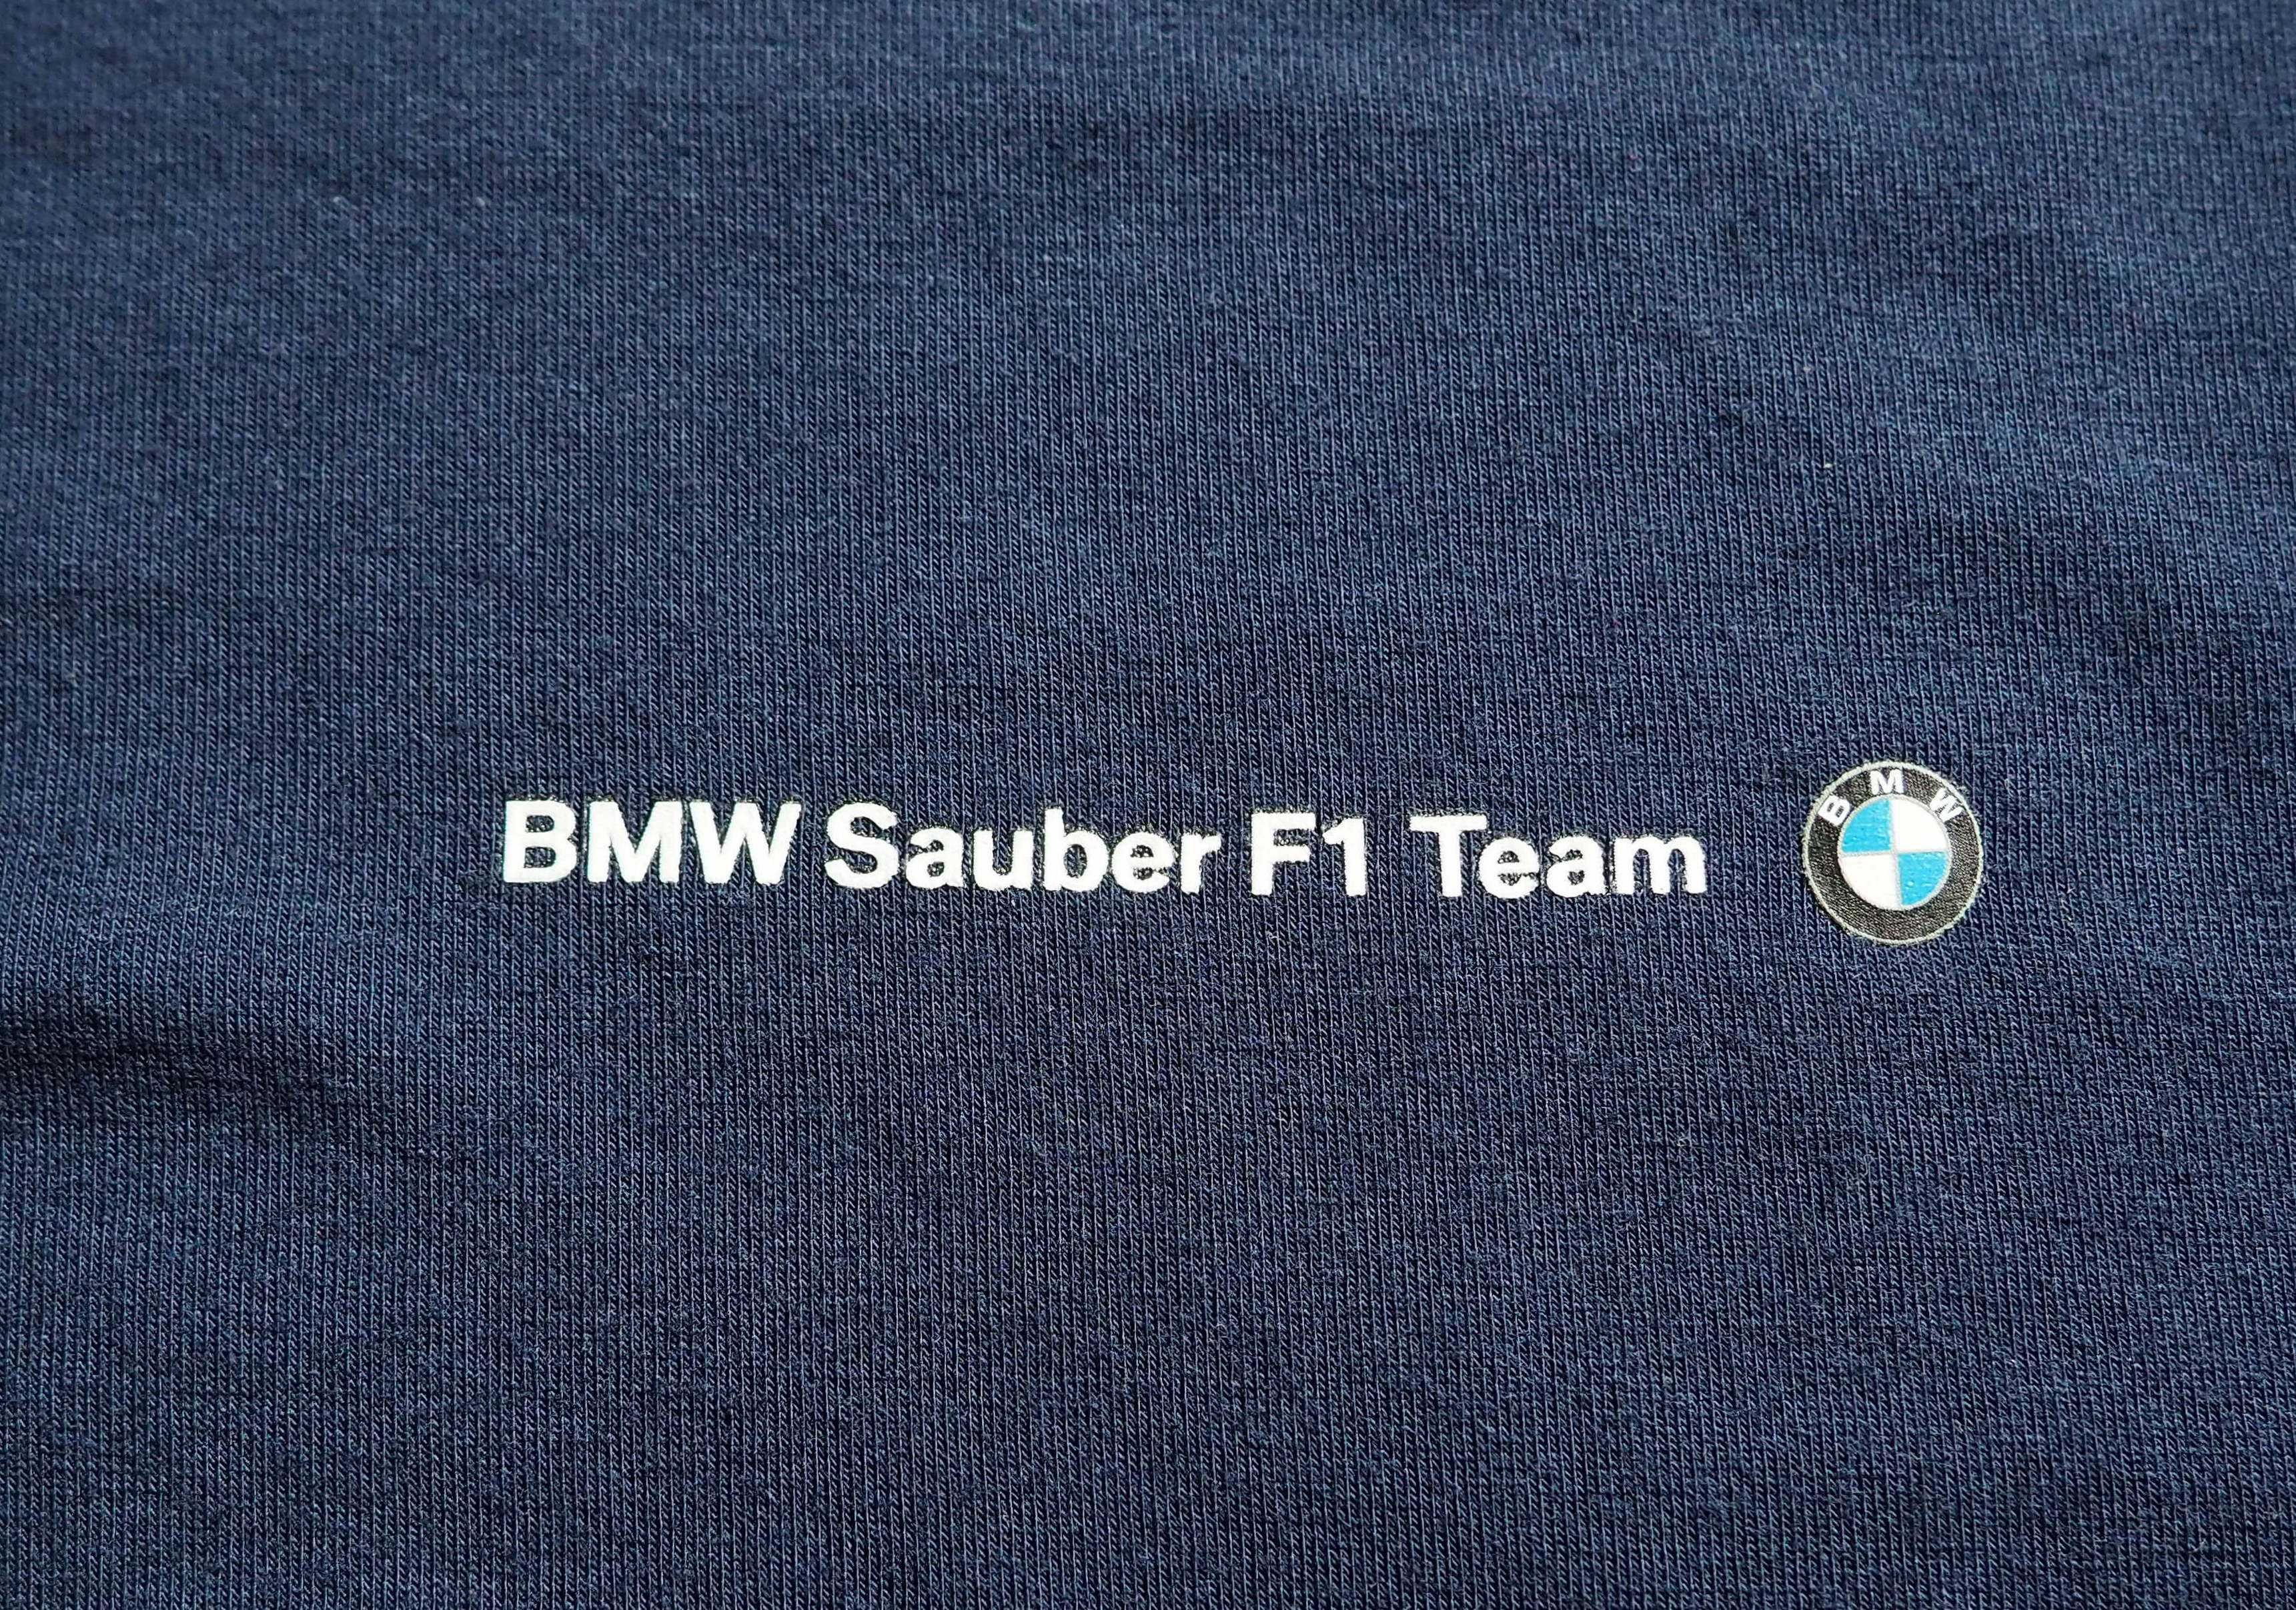 BMW sauber f1 team_koszulka damska_rozmiar L